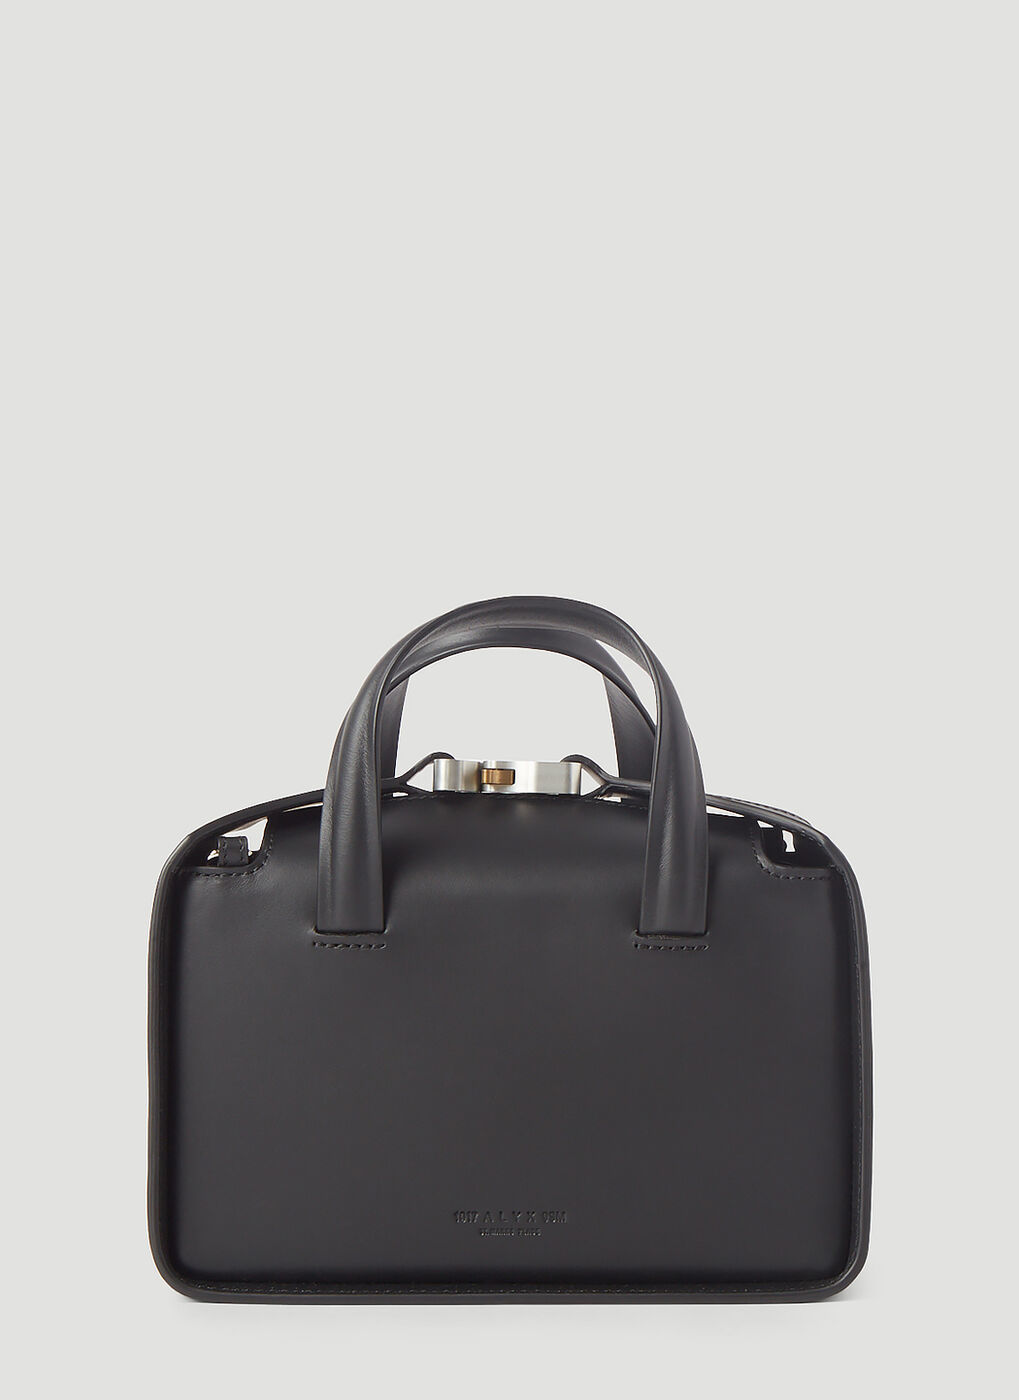 Brie Small Handbag in Black 